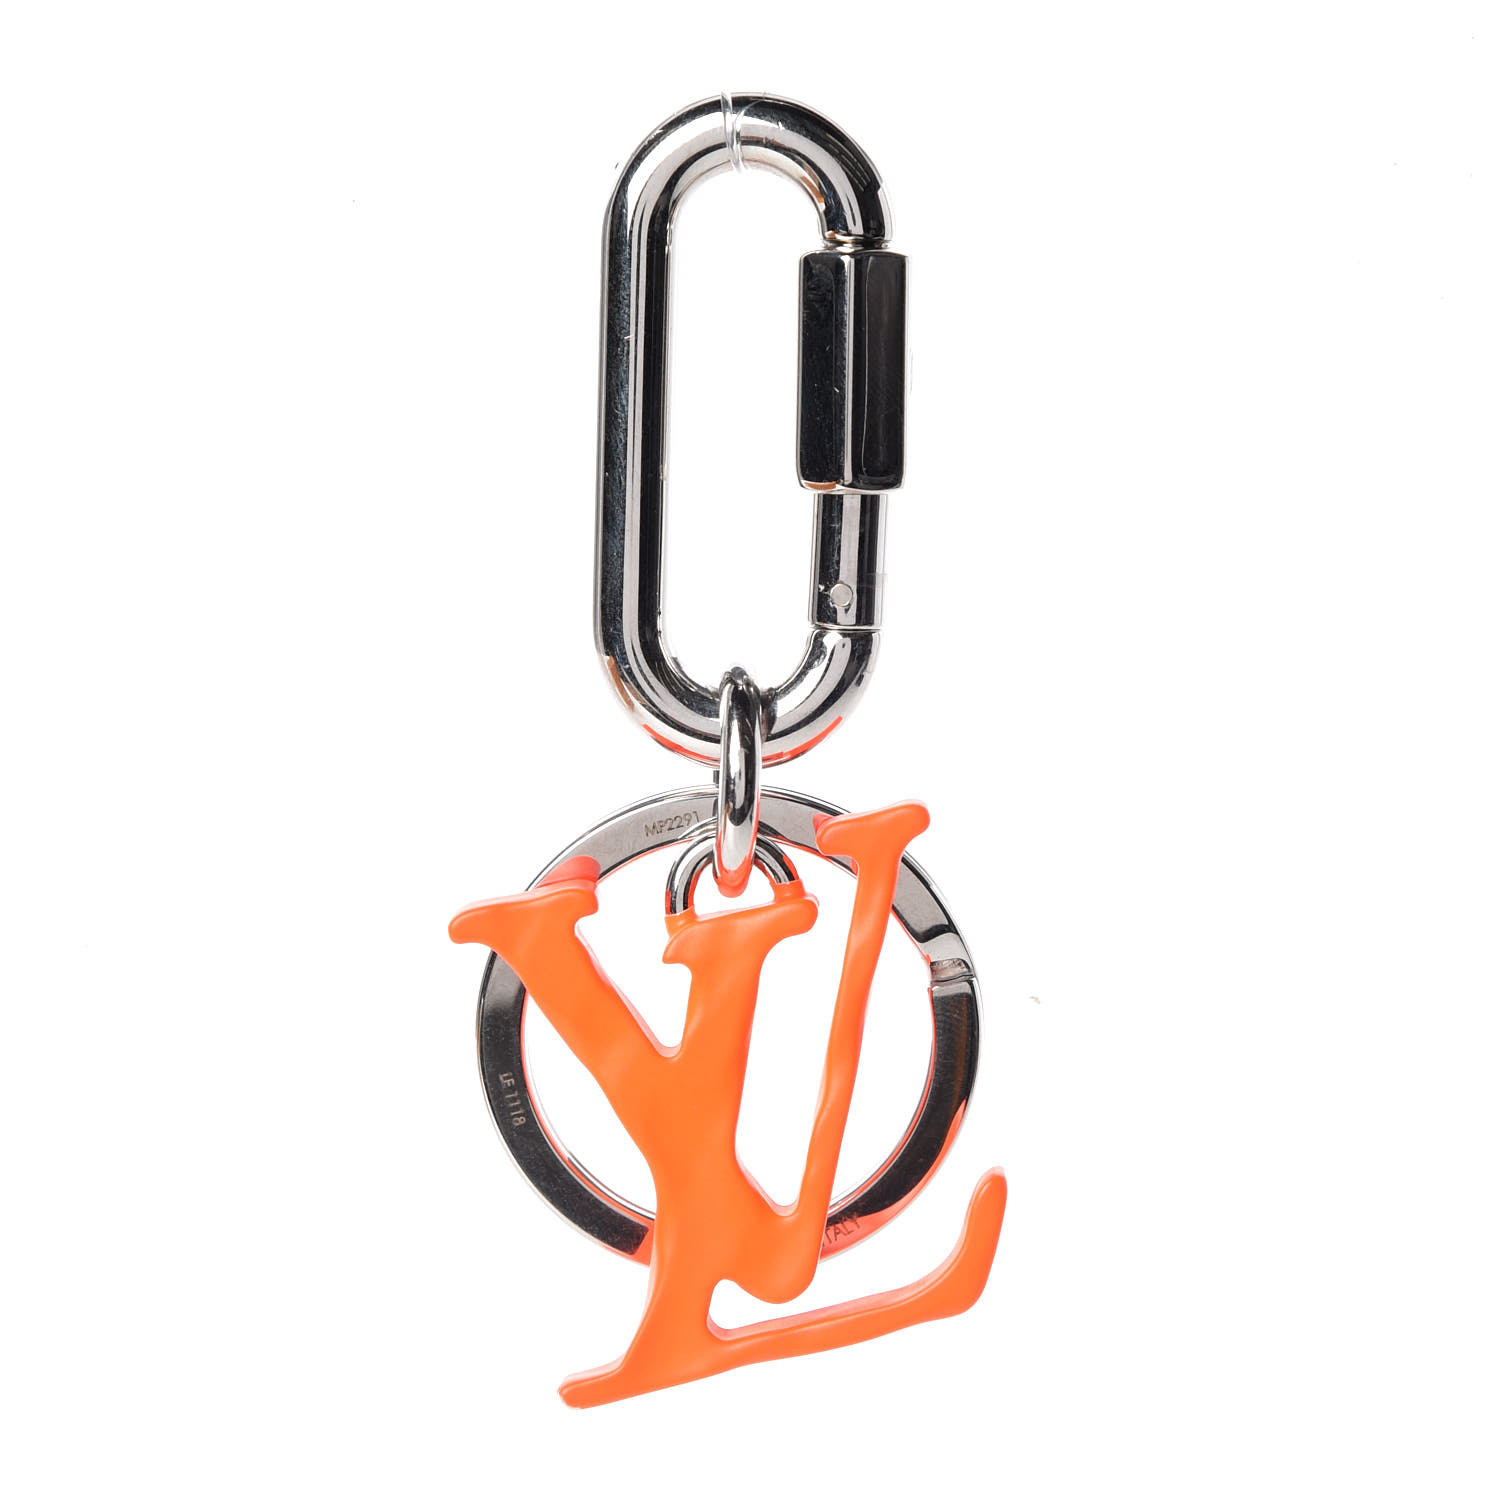 LOUIS VUITTON LV Initials Key Chain Holder Orange 380834